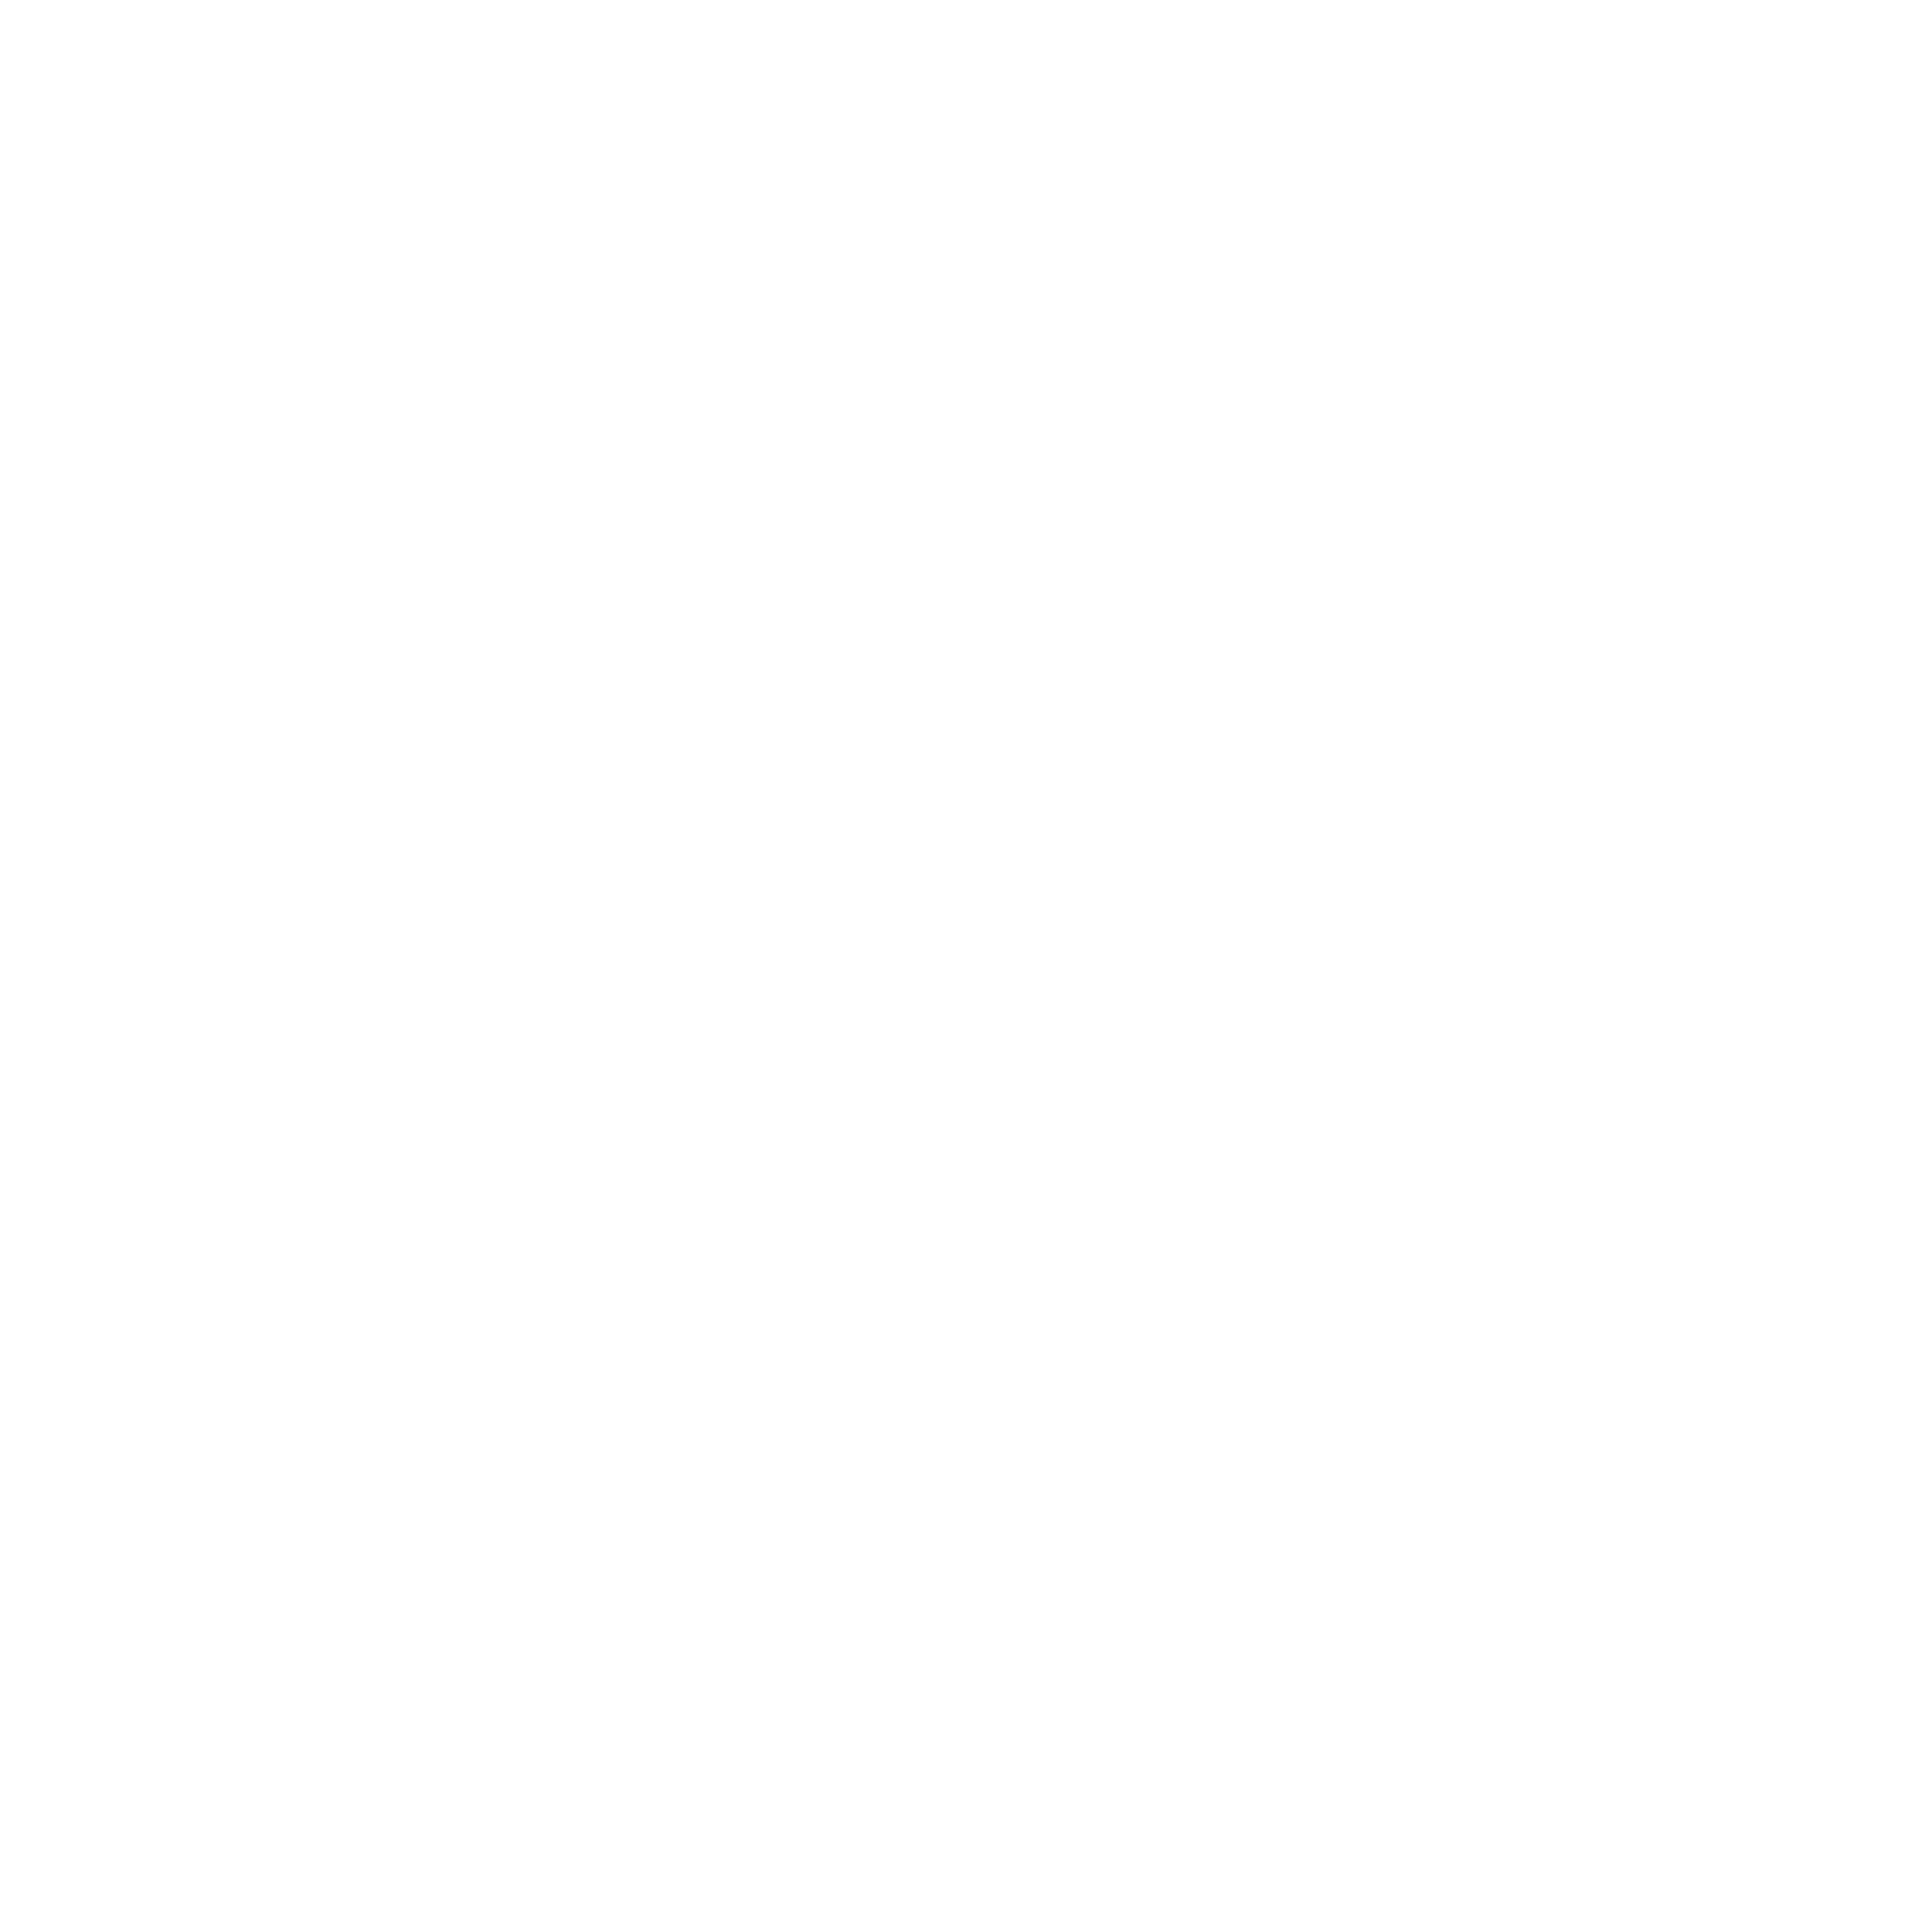 logo beefbar